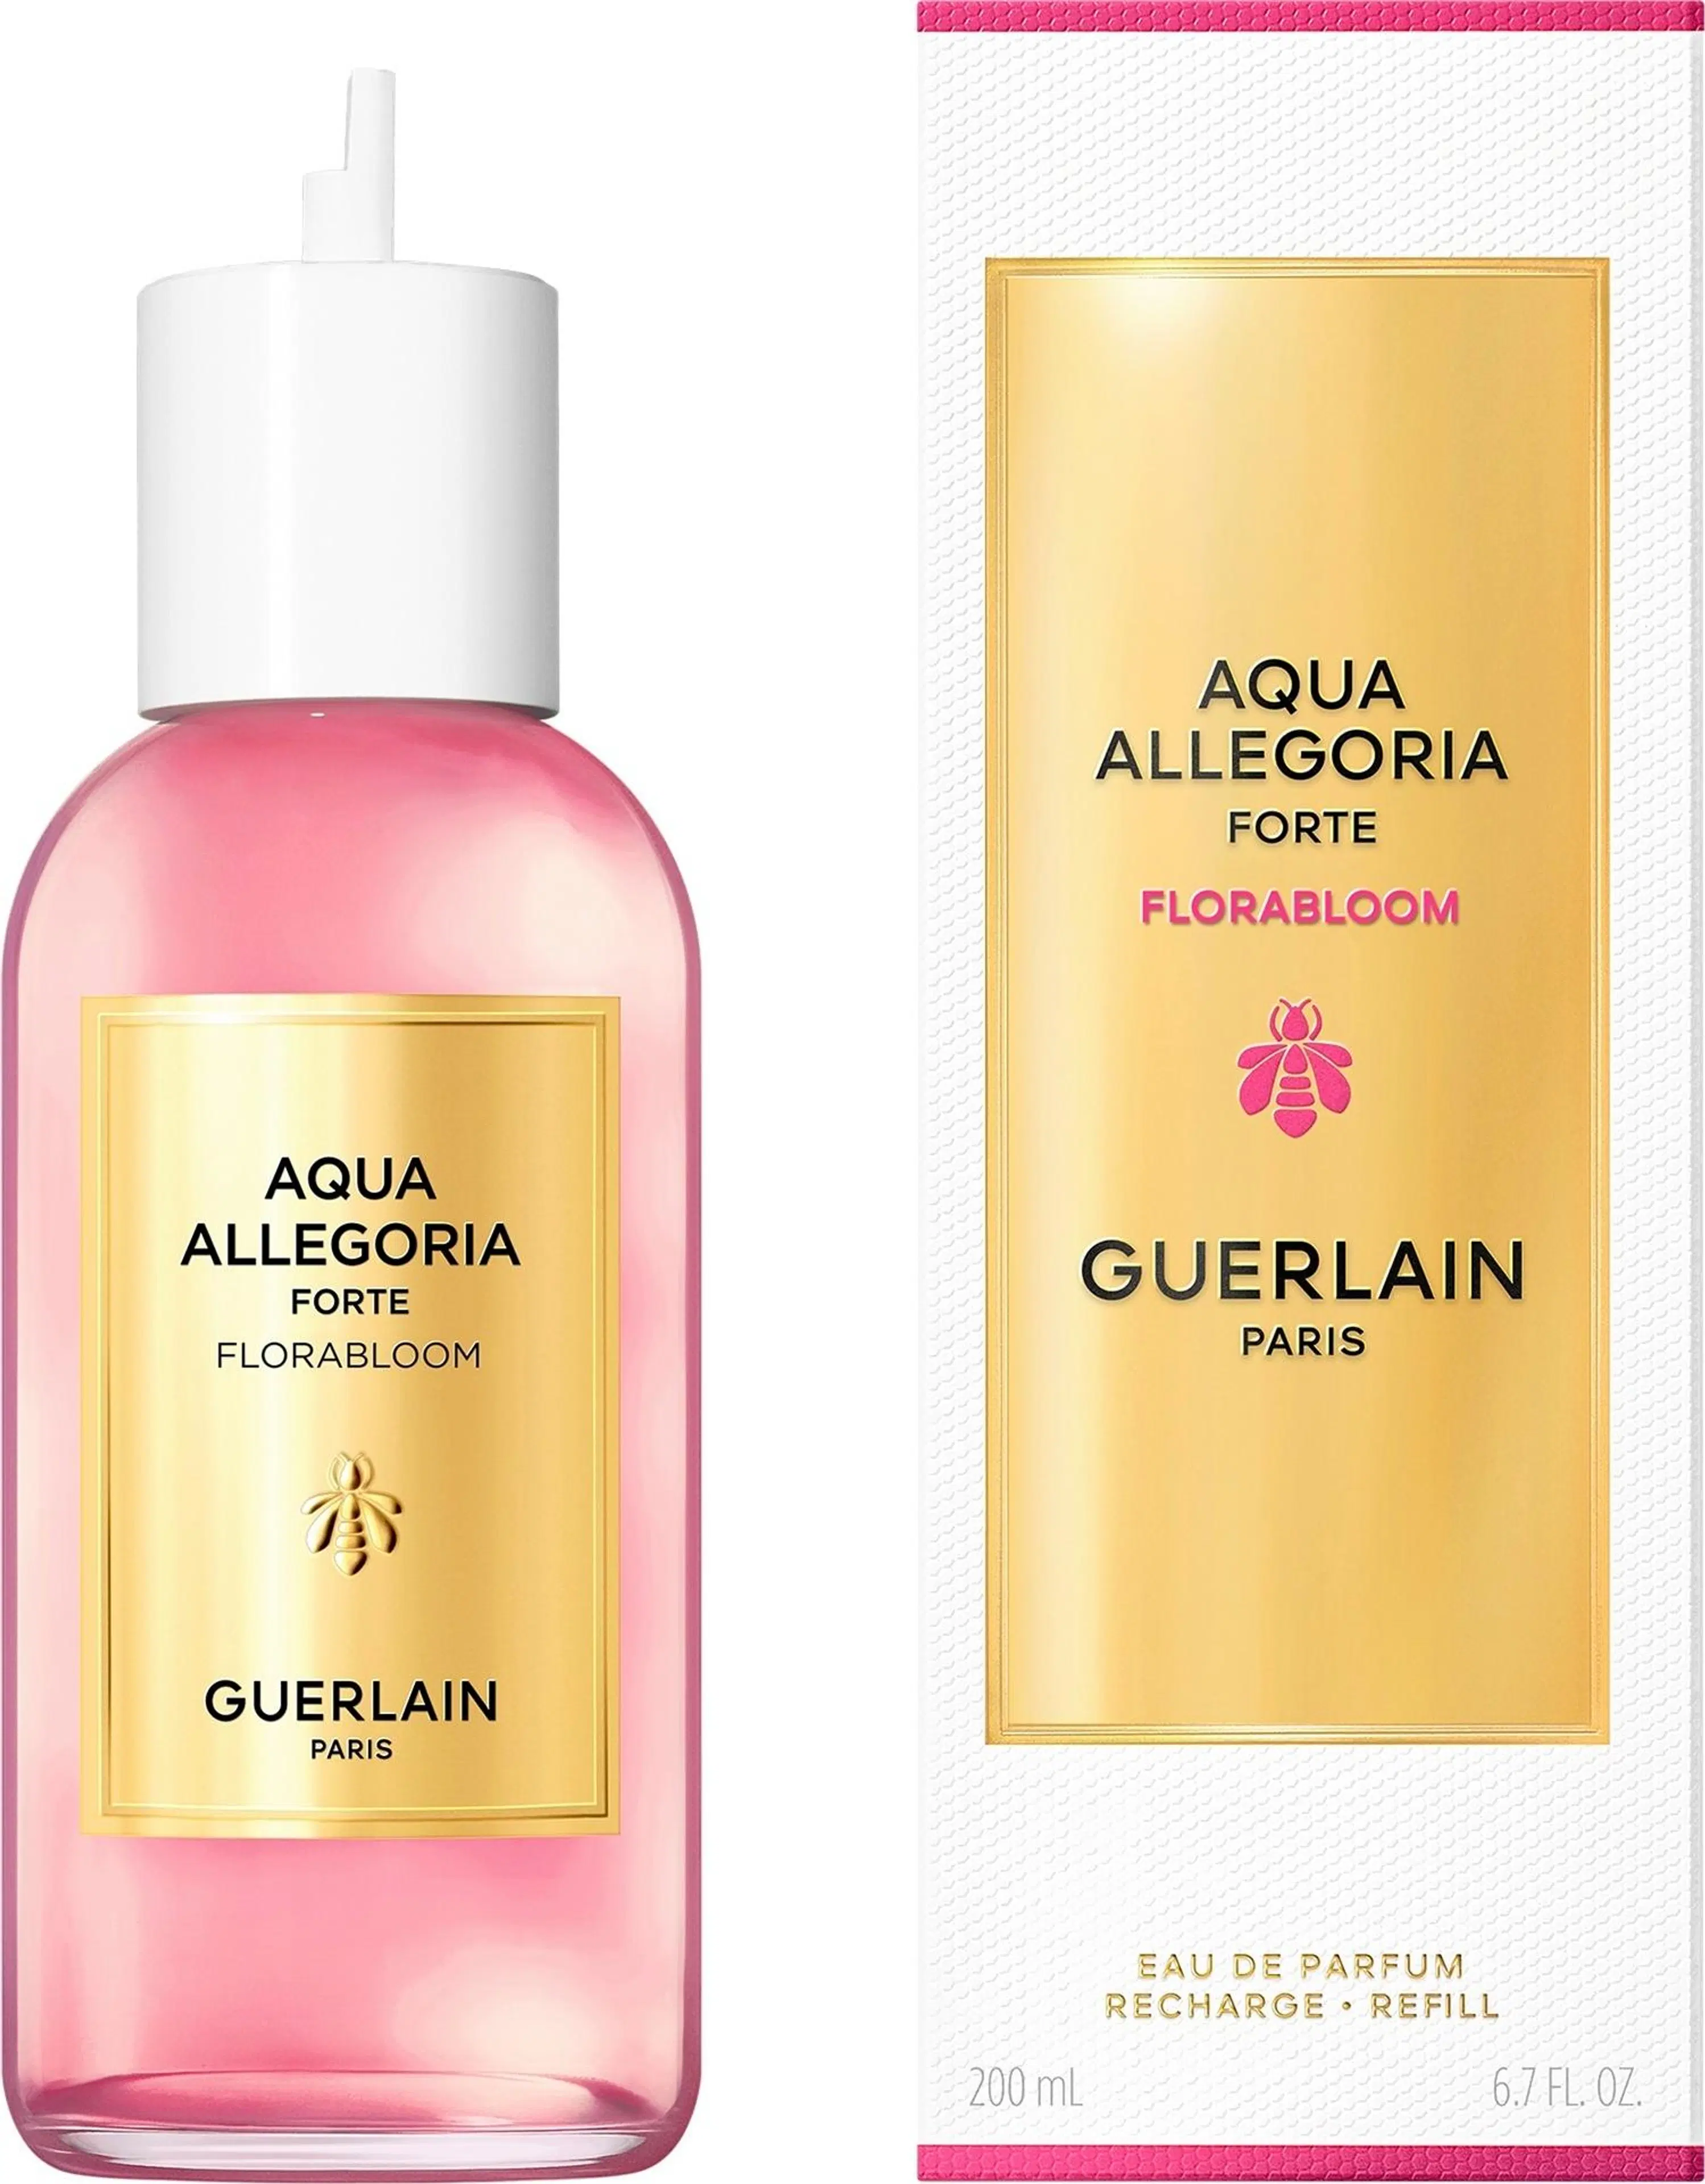 Guerlain Aqua Allegoria Florabloom Forte Eau de Parfum 200 ml Refill